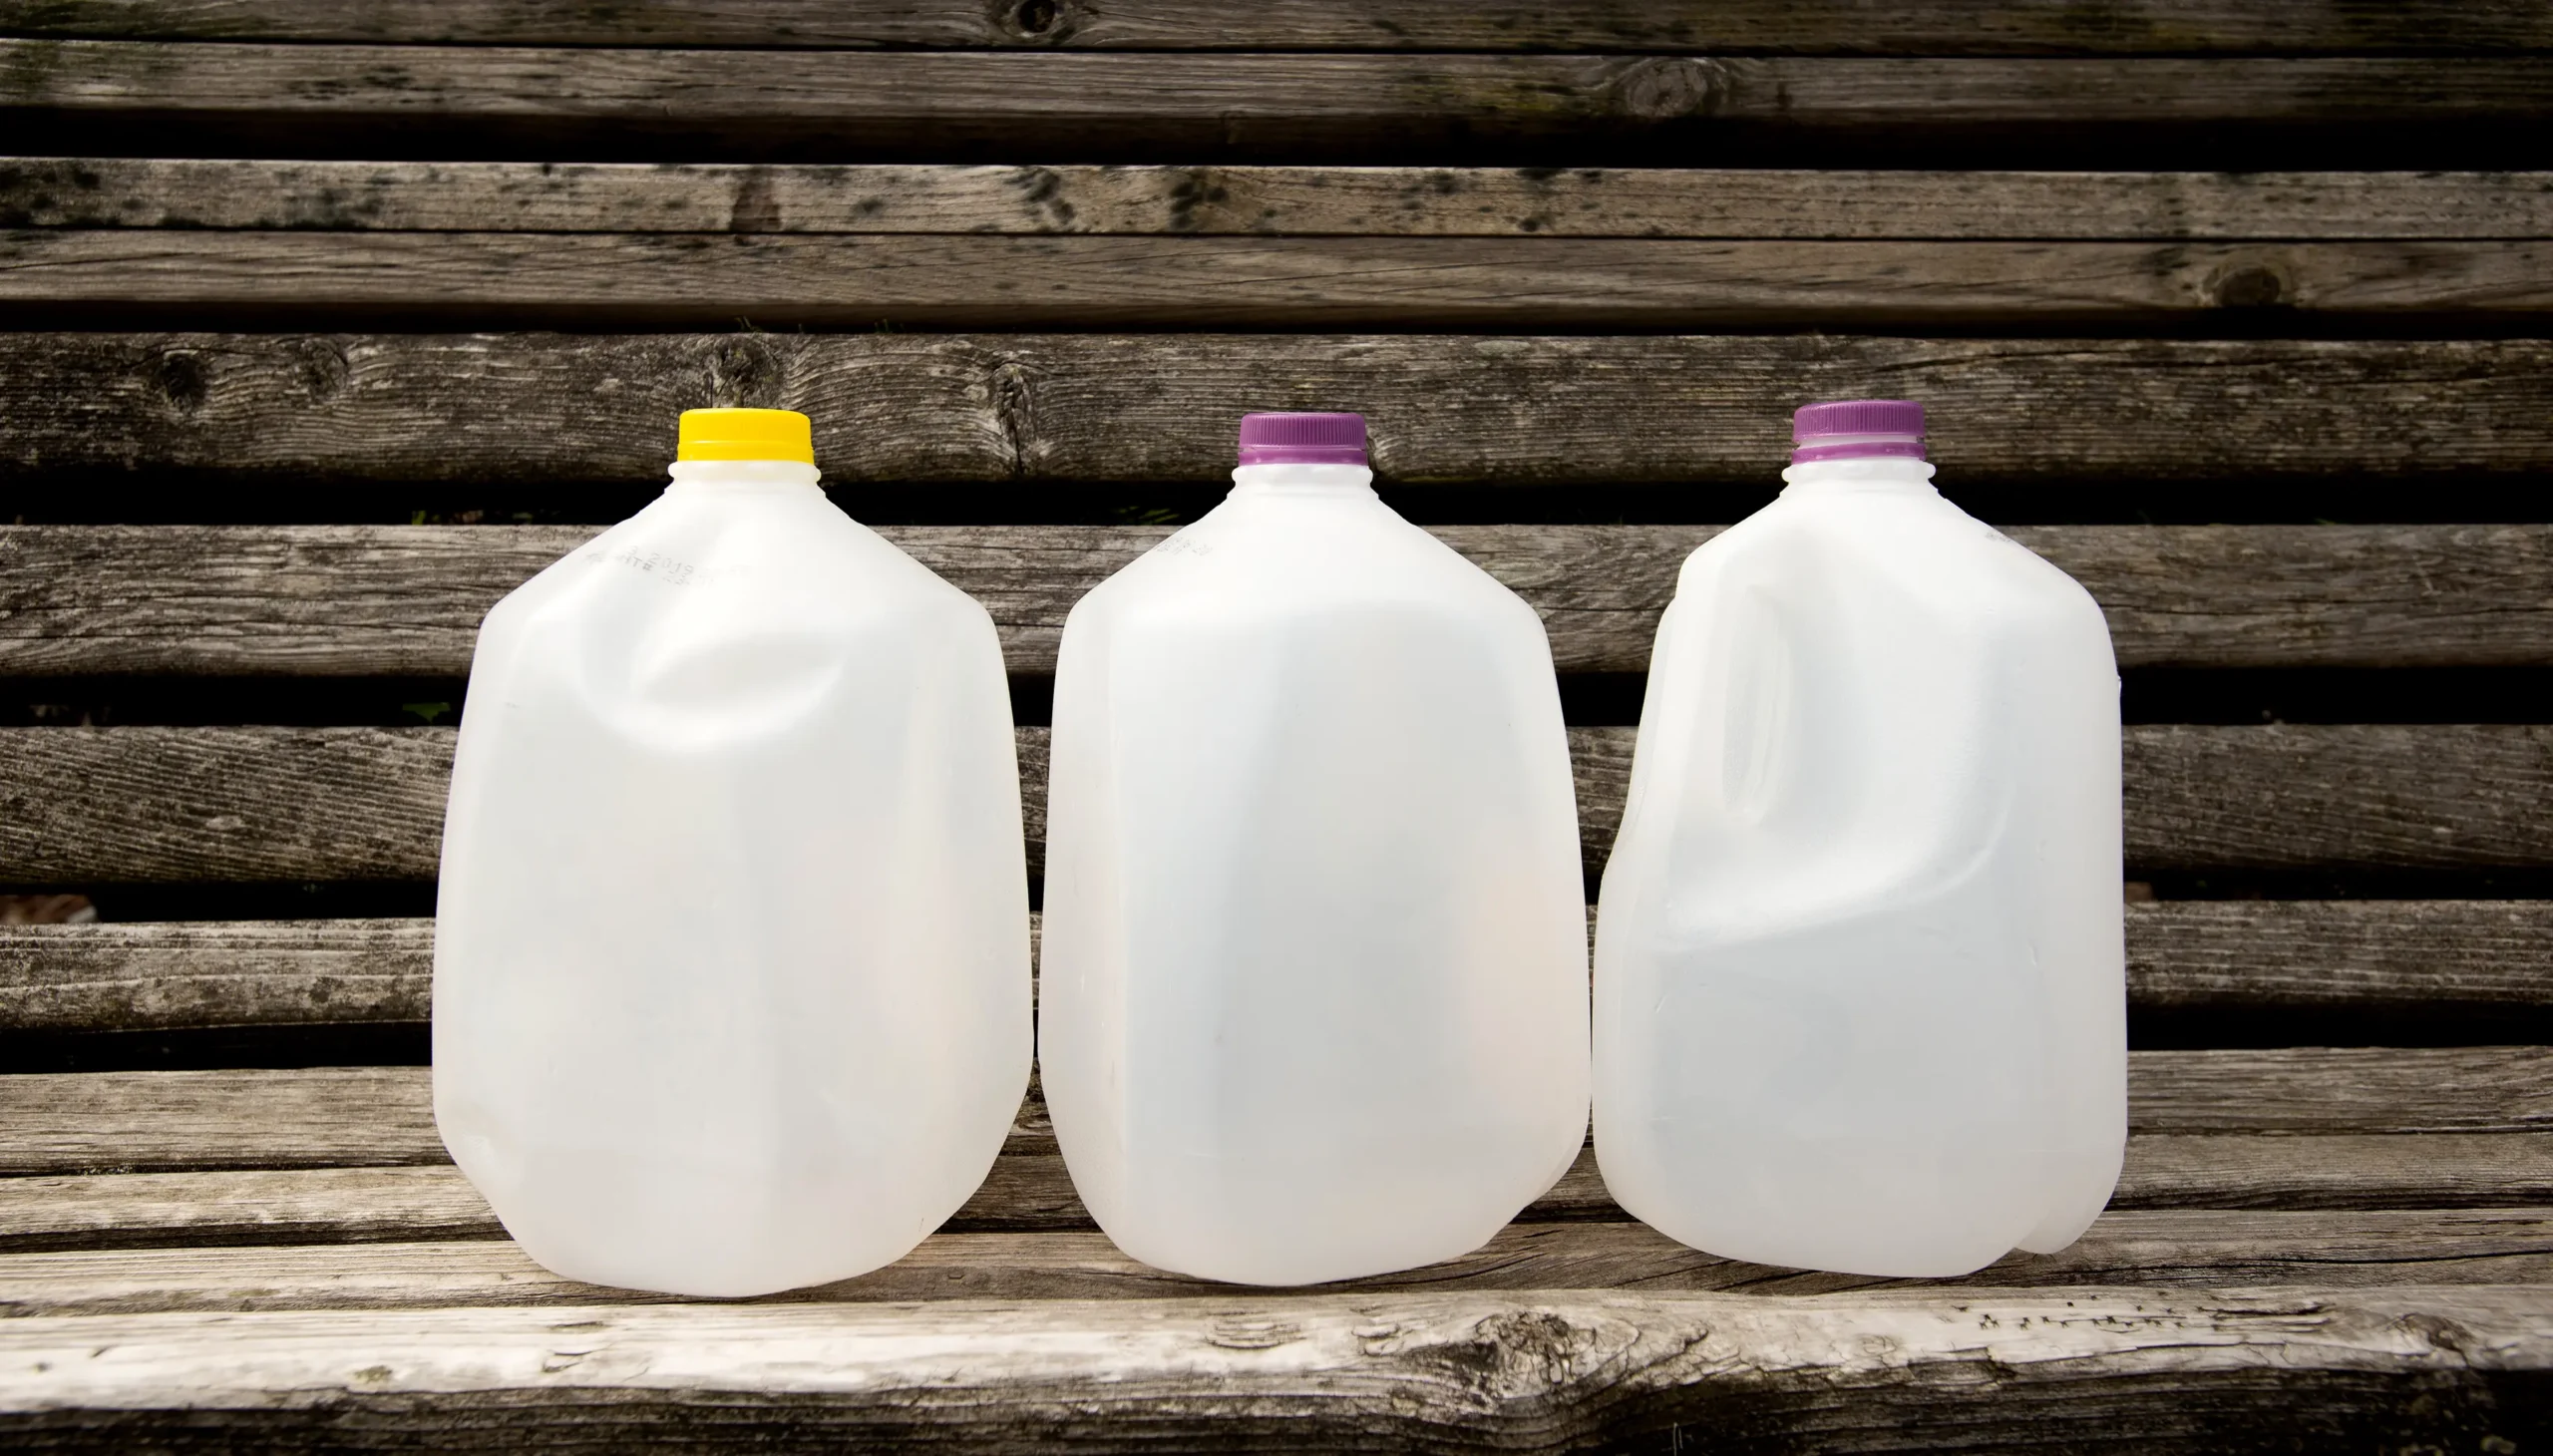 empty milk jugs - Why do people put milk jugs in their yard